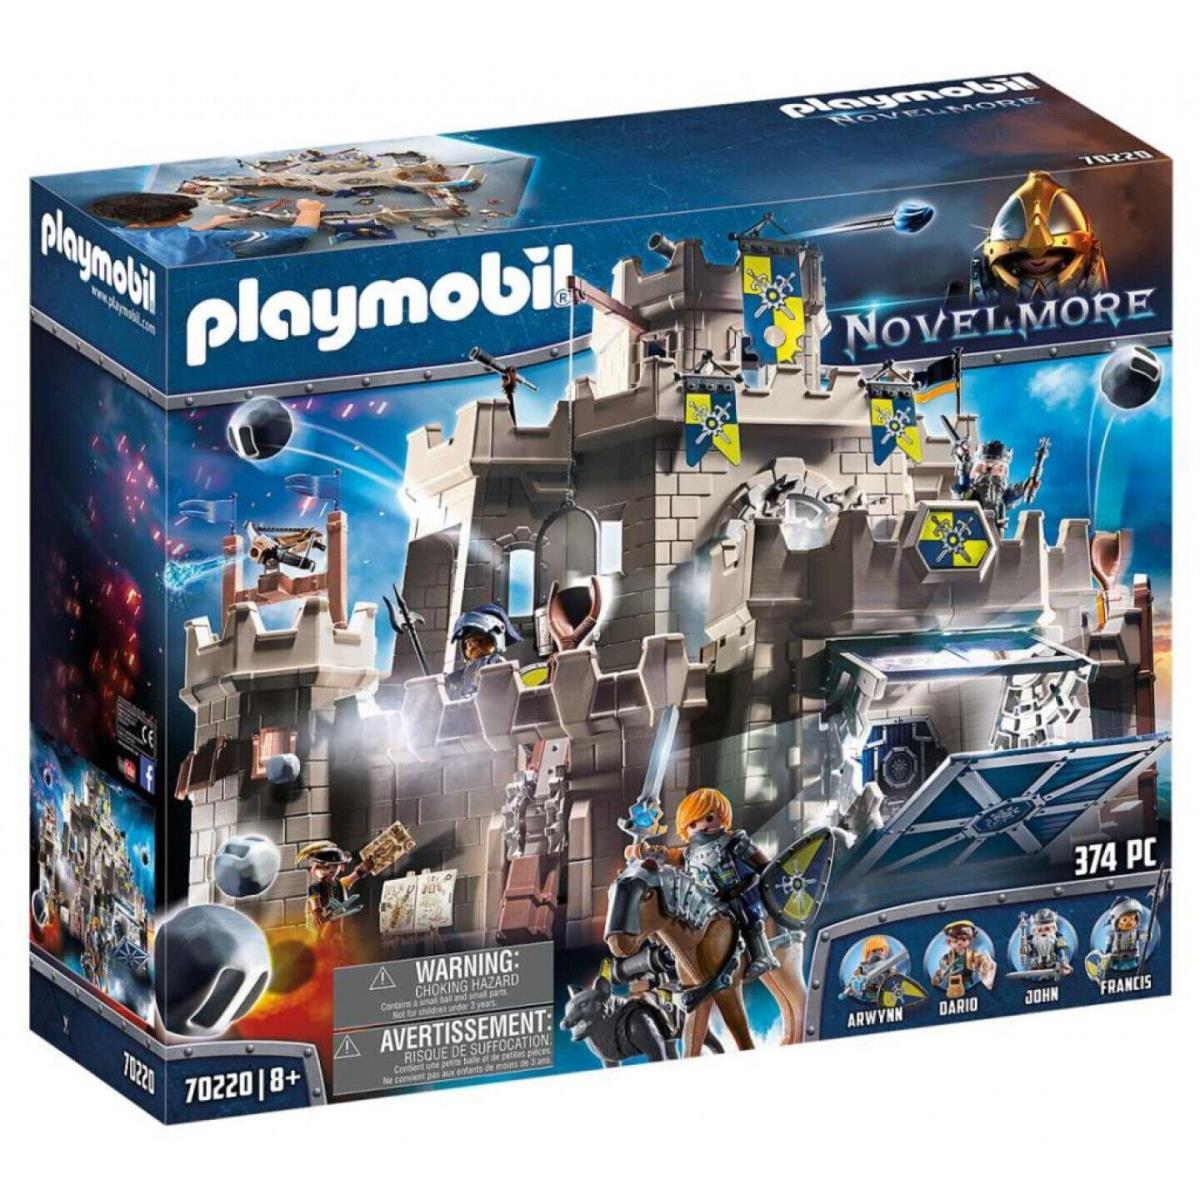 Playmobil Knights of Novelmore Grand Castle -374 Piece 70220